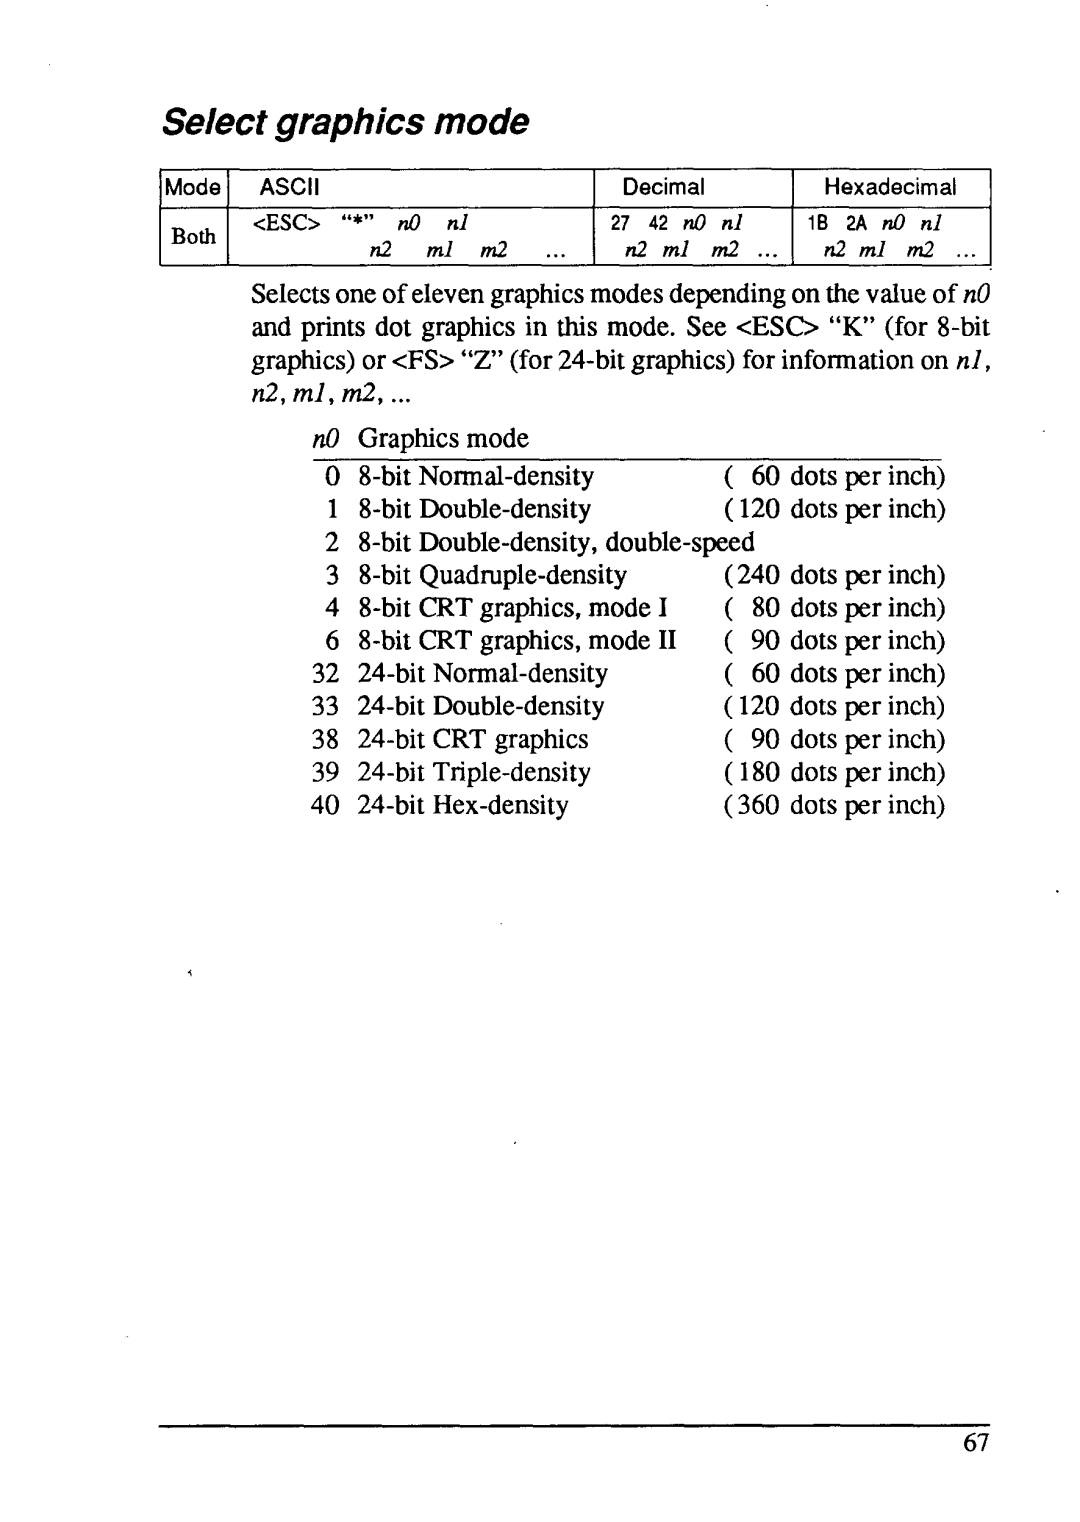 Star Micronics LC24-15 user manual Select graphics mode, 42 n0, 2A n0 